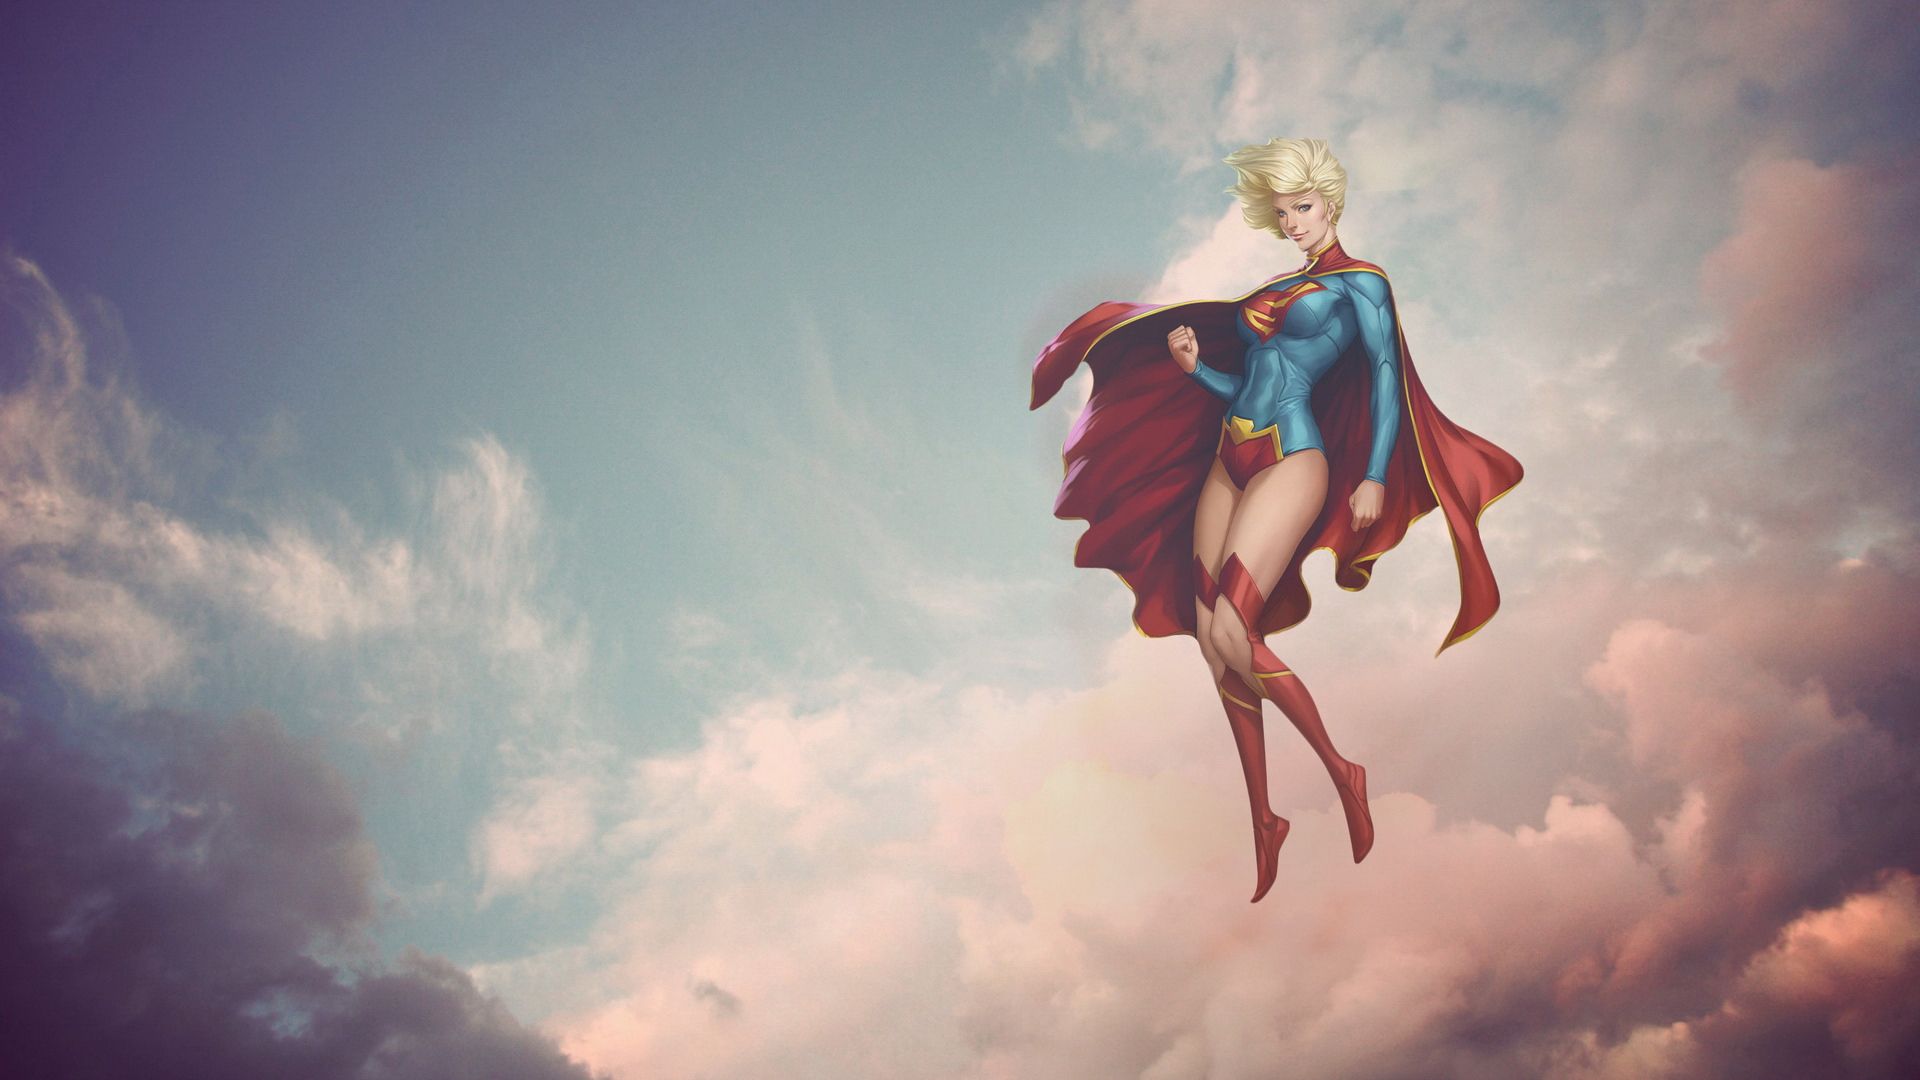 Supergirl 4K Digital Art Wallpapers